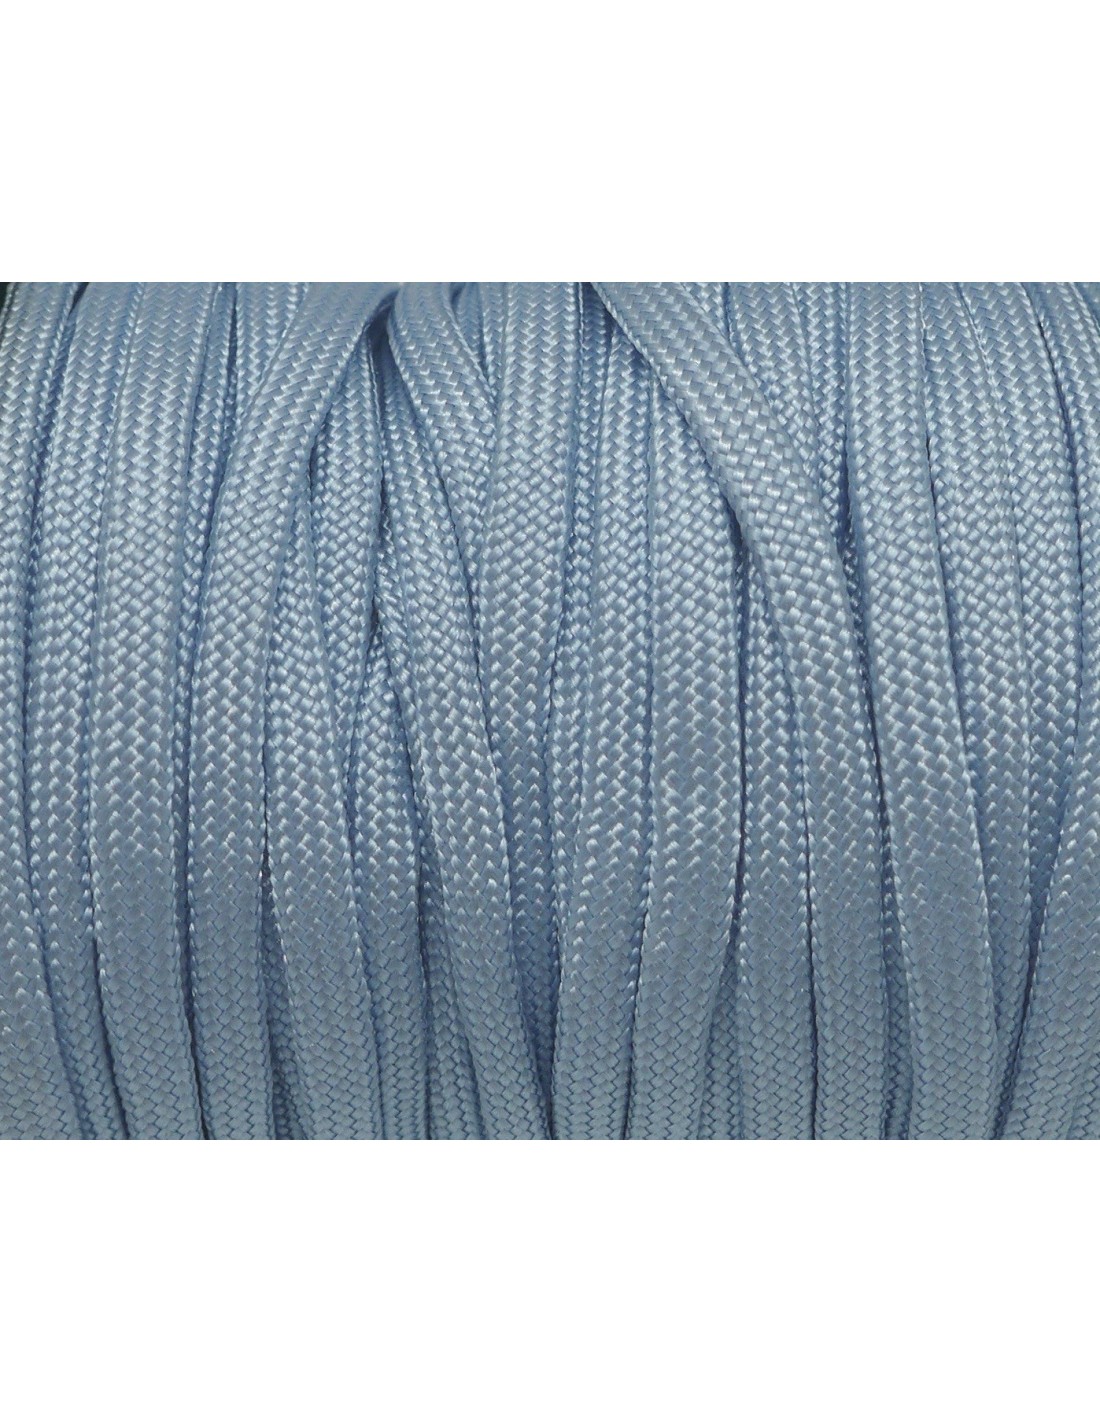 Bleu pâle - Corde 6mm